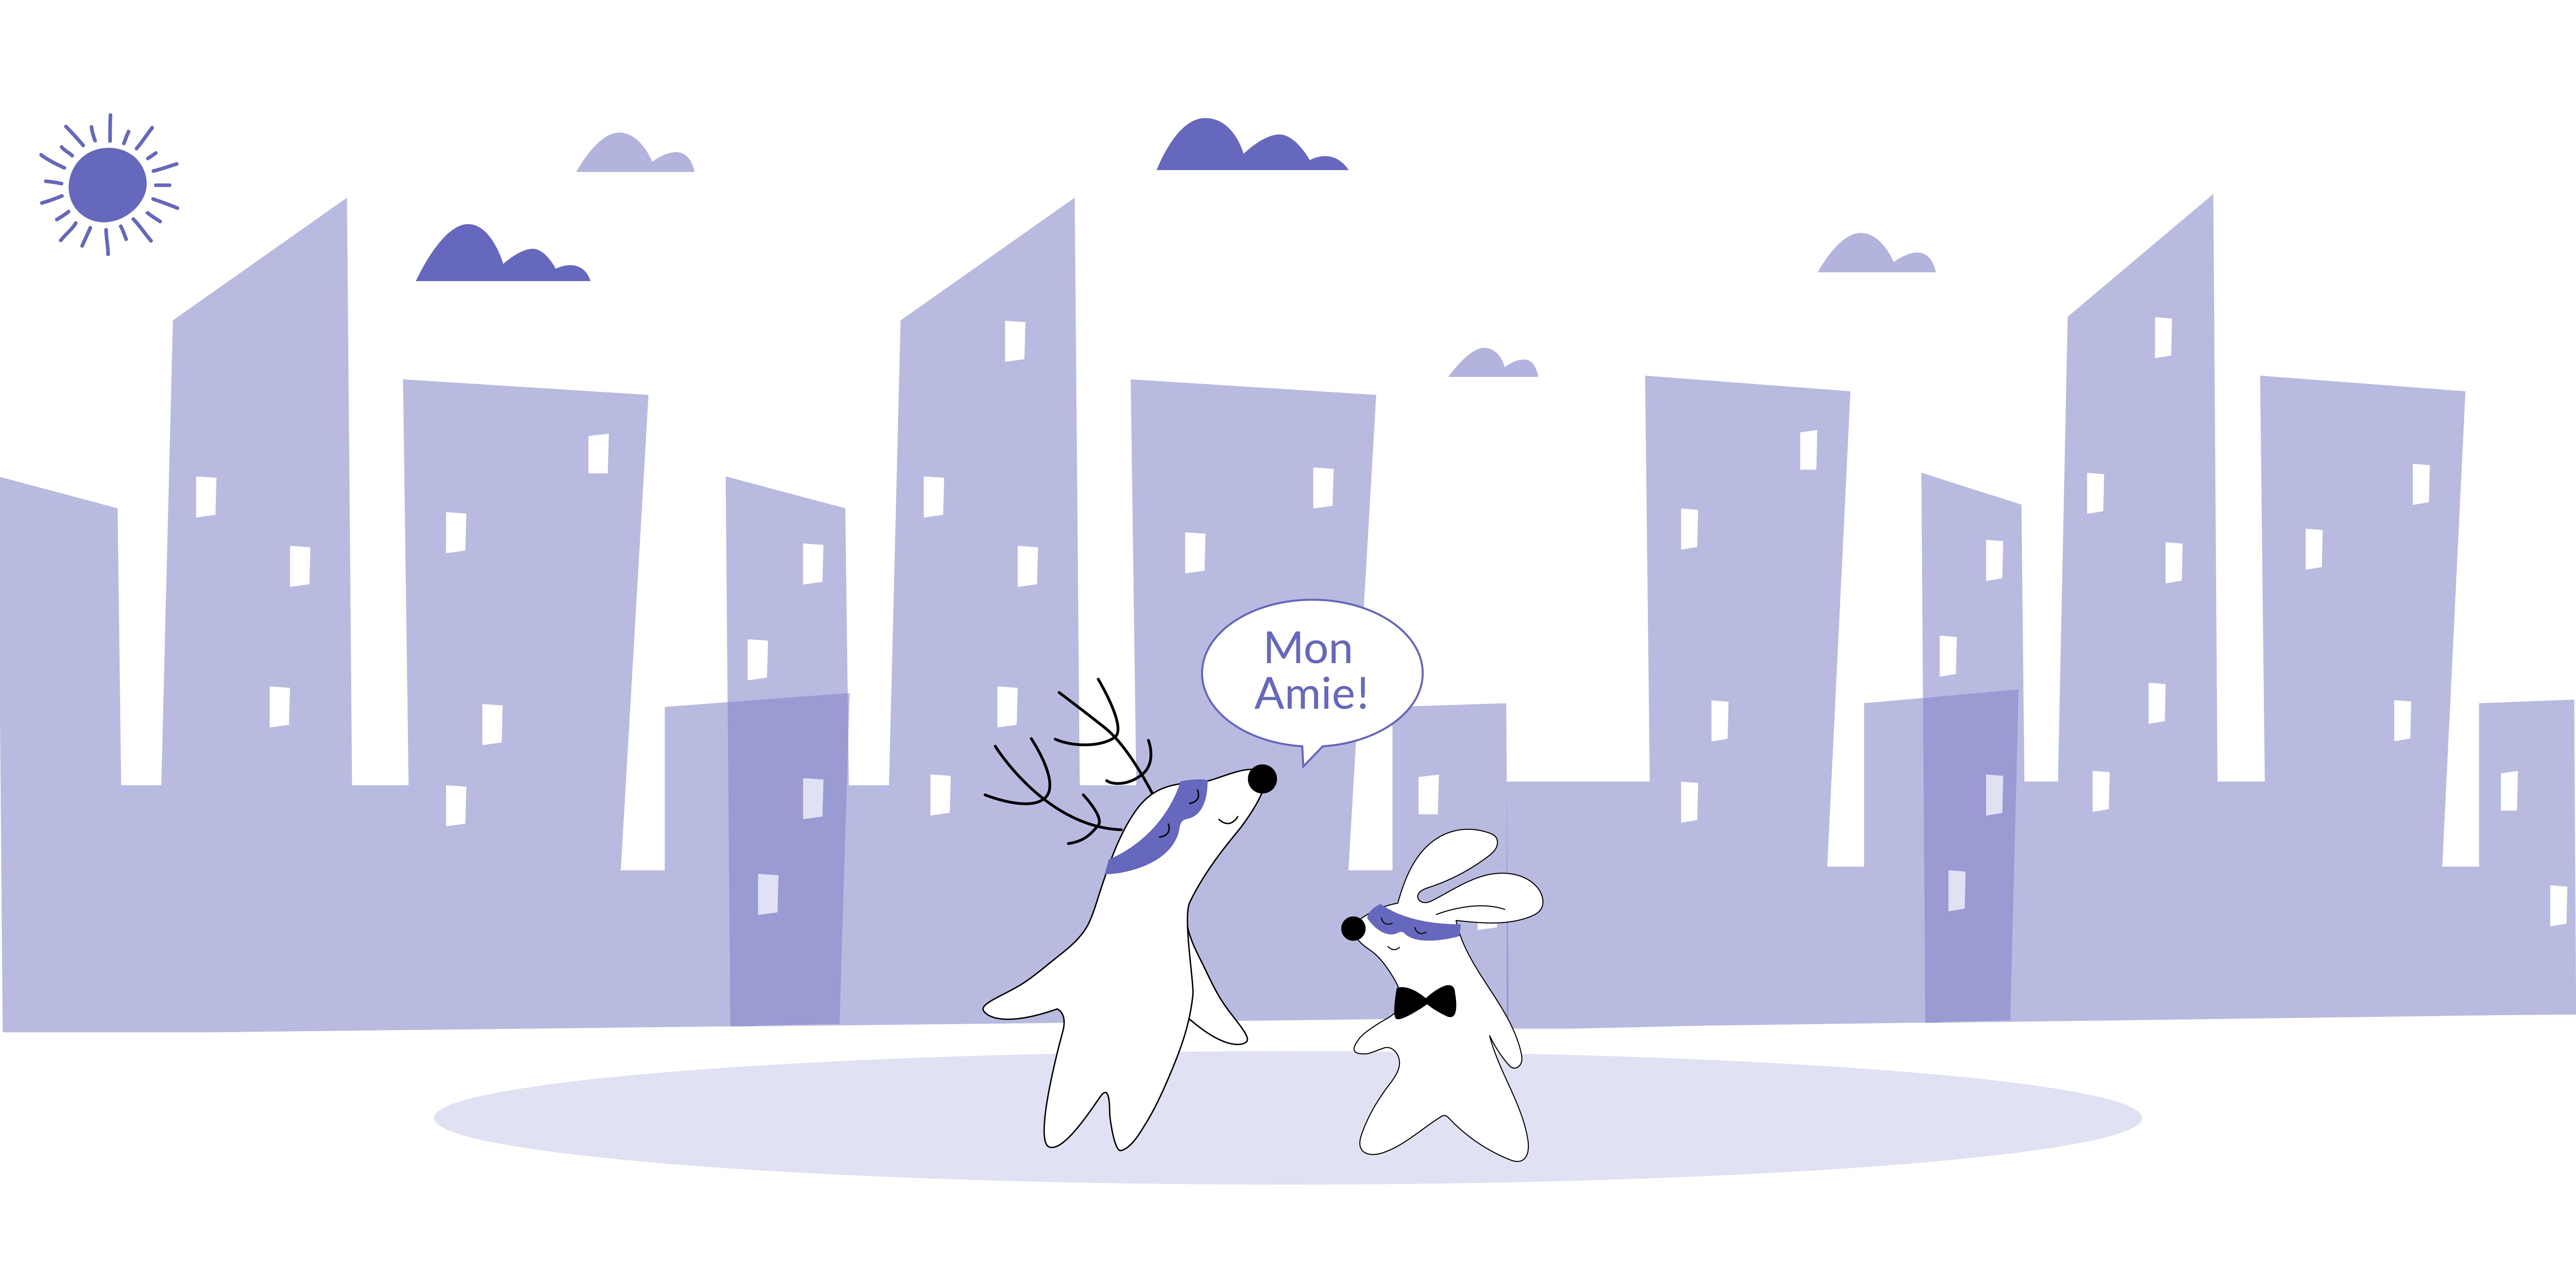 Soren seeing Mr. Rabbit in the street, saying: “Mon Amie!”